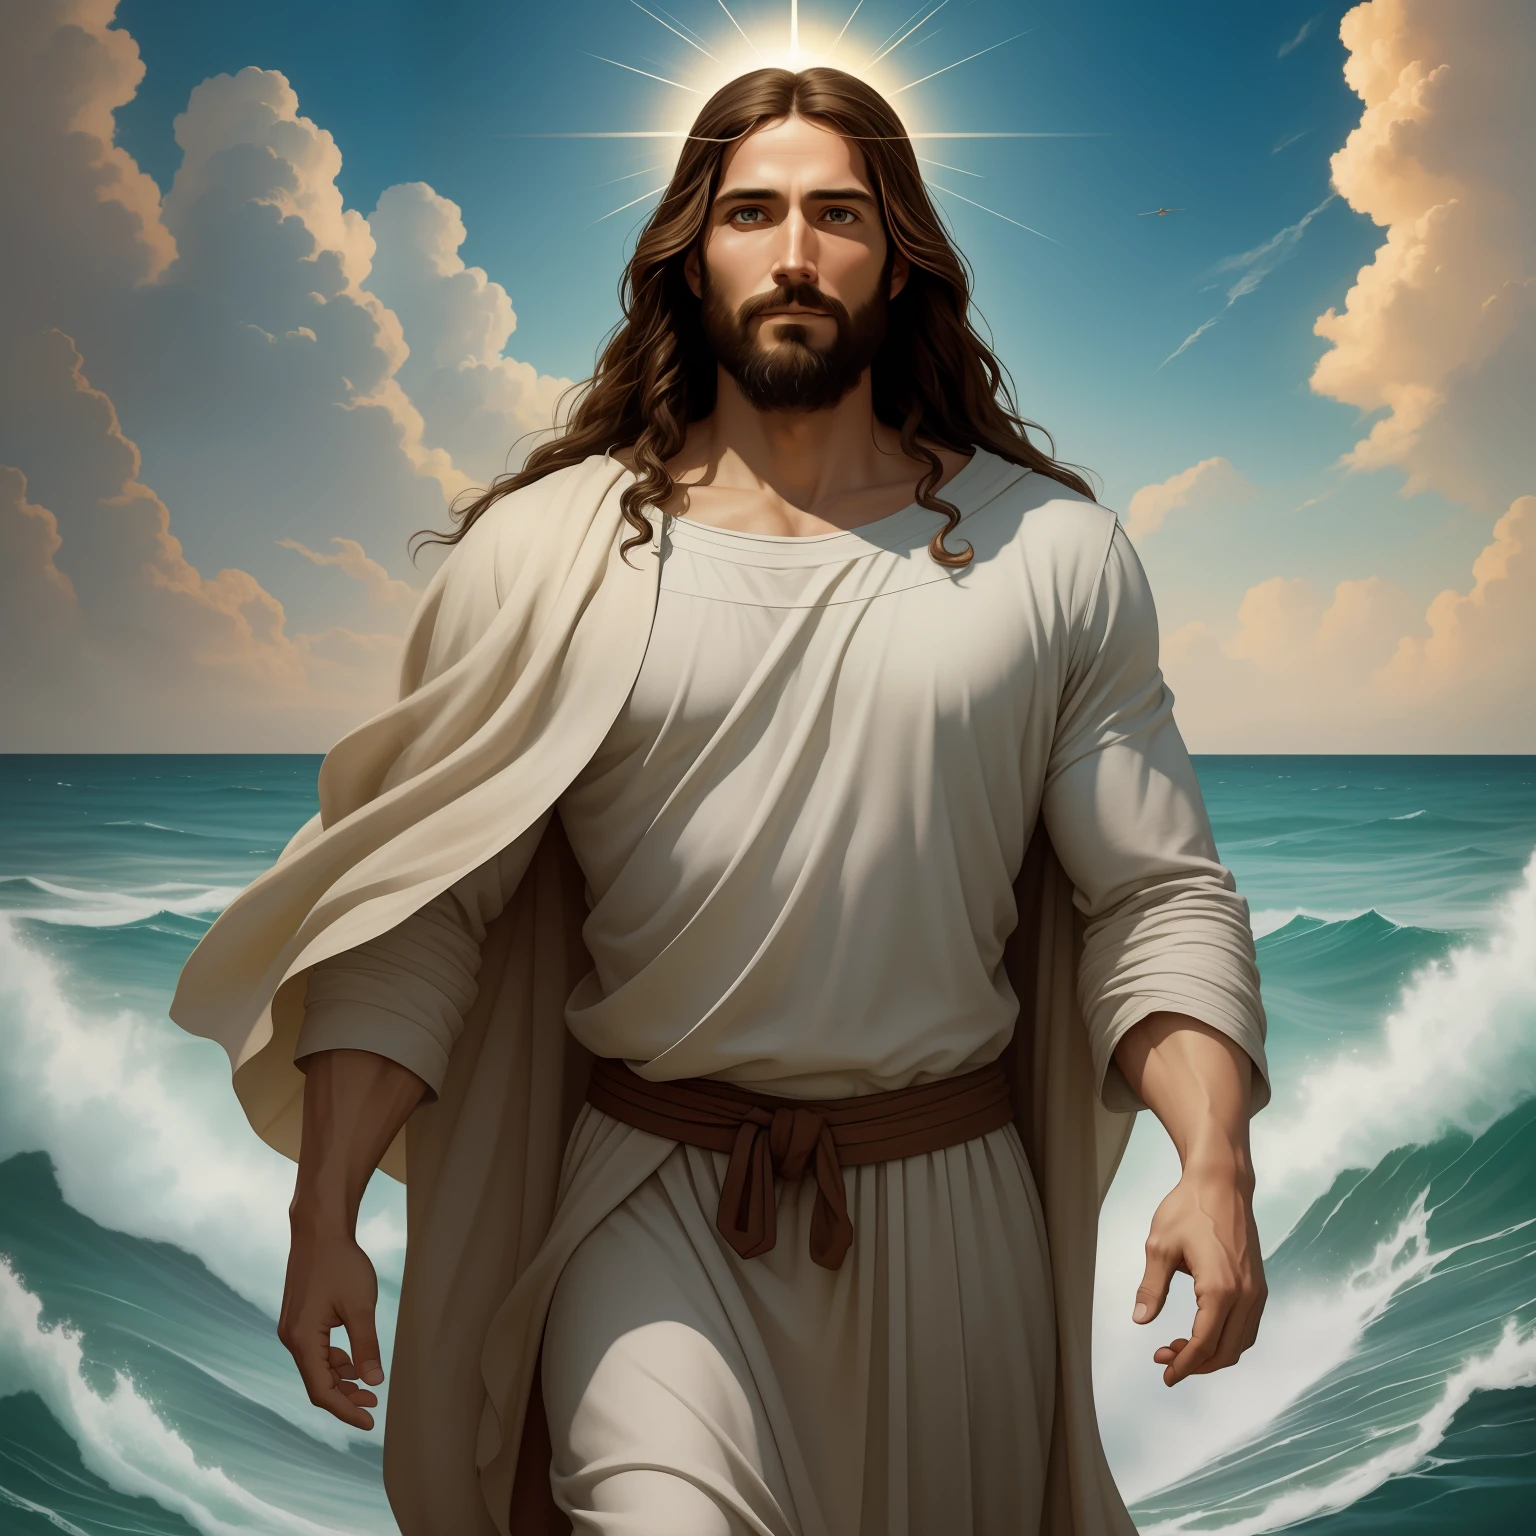 A beautiful ultra-thin 实际的 portrait of Jesus, 先知, 一名男子 35 岁 希伯来语 布鲁内特, 棕色短发, 长长的棕色胡子, 和, 帮助人们 , 穿着胸部闭合的长亚麻束腰外衣, 正面视图, 全身, 圣经的, 实际的,作者：迭戈·委拉斯开兹,彼得·保罗·鲁本斯,伦勃朗,亚历克斯·罗斯,8千, 概念艺术, Photo实际的, 实际的,  插图, 油画, 超现实主义, Hyper实际的, 帮助人们 , 数字艺术, 风格, watercolorReal Jesus flying on sky 和 a flying cloud in the background, 耶稣在水上行走, 圣经的 illustration, epic 圣经的 representation, 迫使他逃跑, 从海洋里出来, ! 手拿!, 下船, 海洋之神, 美丽的表现, 8千 3D Model, 实际的,
a 3D 实际的 of 耶稣 和 a halo in the sky, 耶稣 christ, 在天堂微笑, portrait of 耶稣 christ, 耶稣 face, 35 年轻的全能神, 天神像, 格雷格·奥尔森, gigachad 耶稣, 耶稣 of nazareth, 耶稣, 上帝的面孔, 上帝看着我, 他热情地欢迎你, 他很高兴, 头像图片